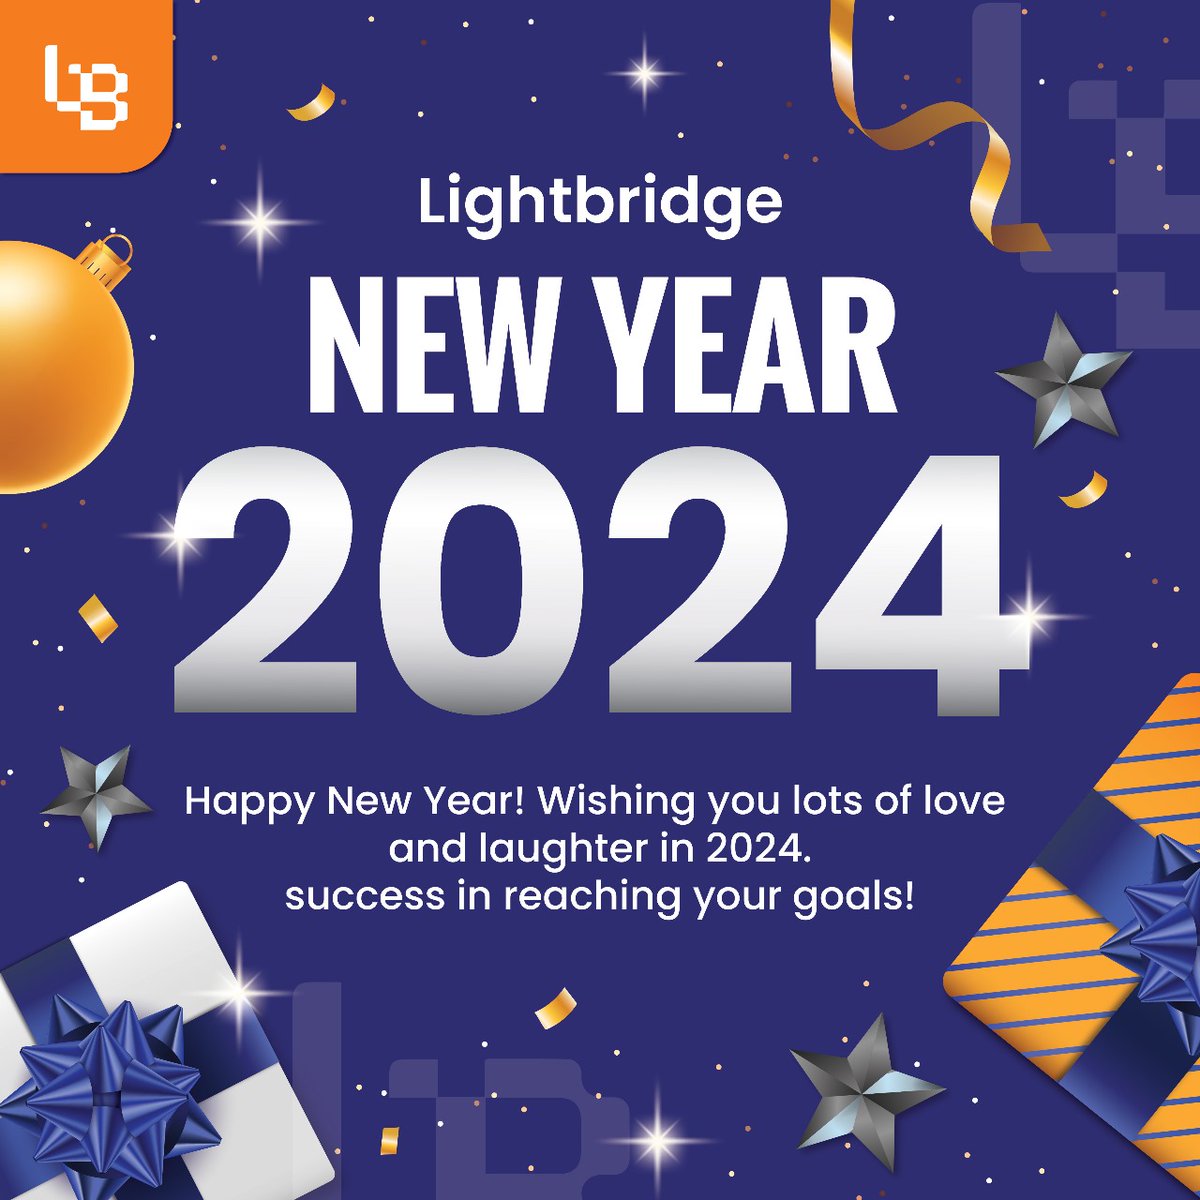 Seiring dengan datangnya Tahun Baru, semoga membawa kemakmuran, kesehatan yang baik, serta kebahagiaan tanpa batas.

Lightbridge mengucapkan selamat tahun baru 2024.

#lightbridge #startup #marketing #videotron #digitalbillboard #umkm #newyear #2024 #tahunbaru

#lightbridge